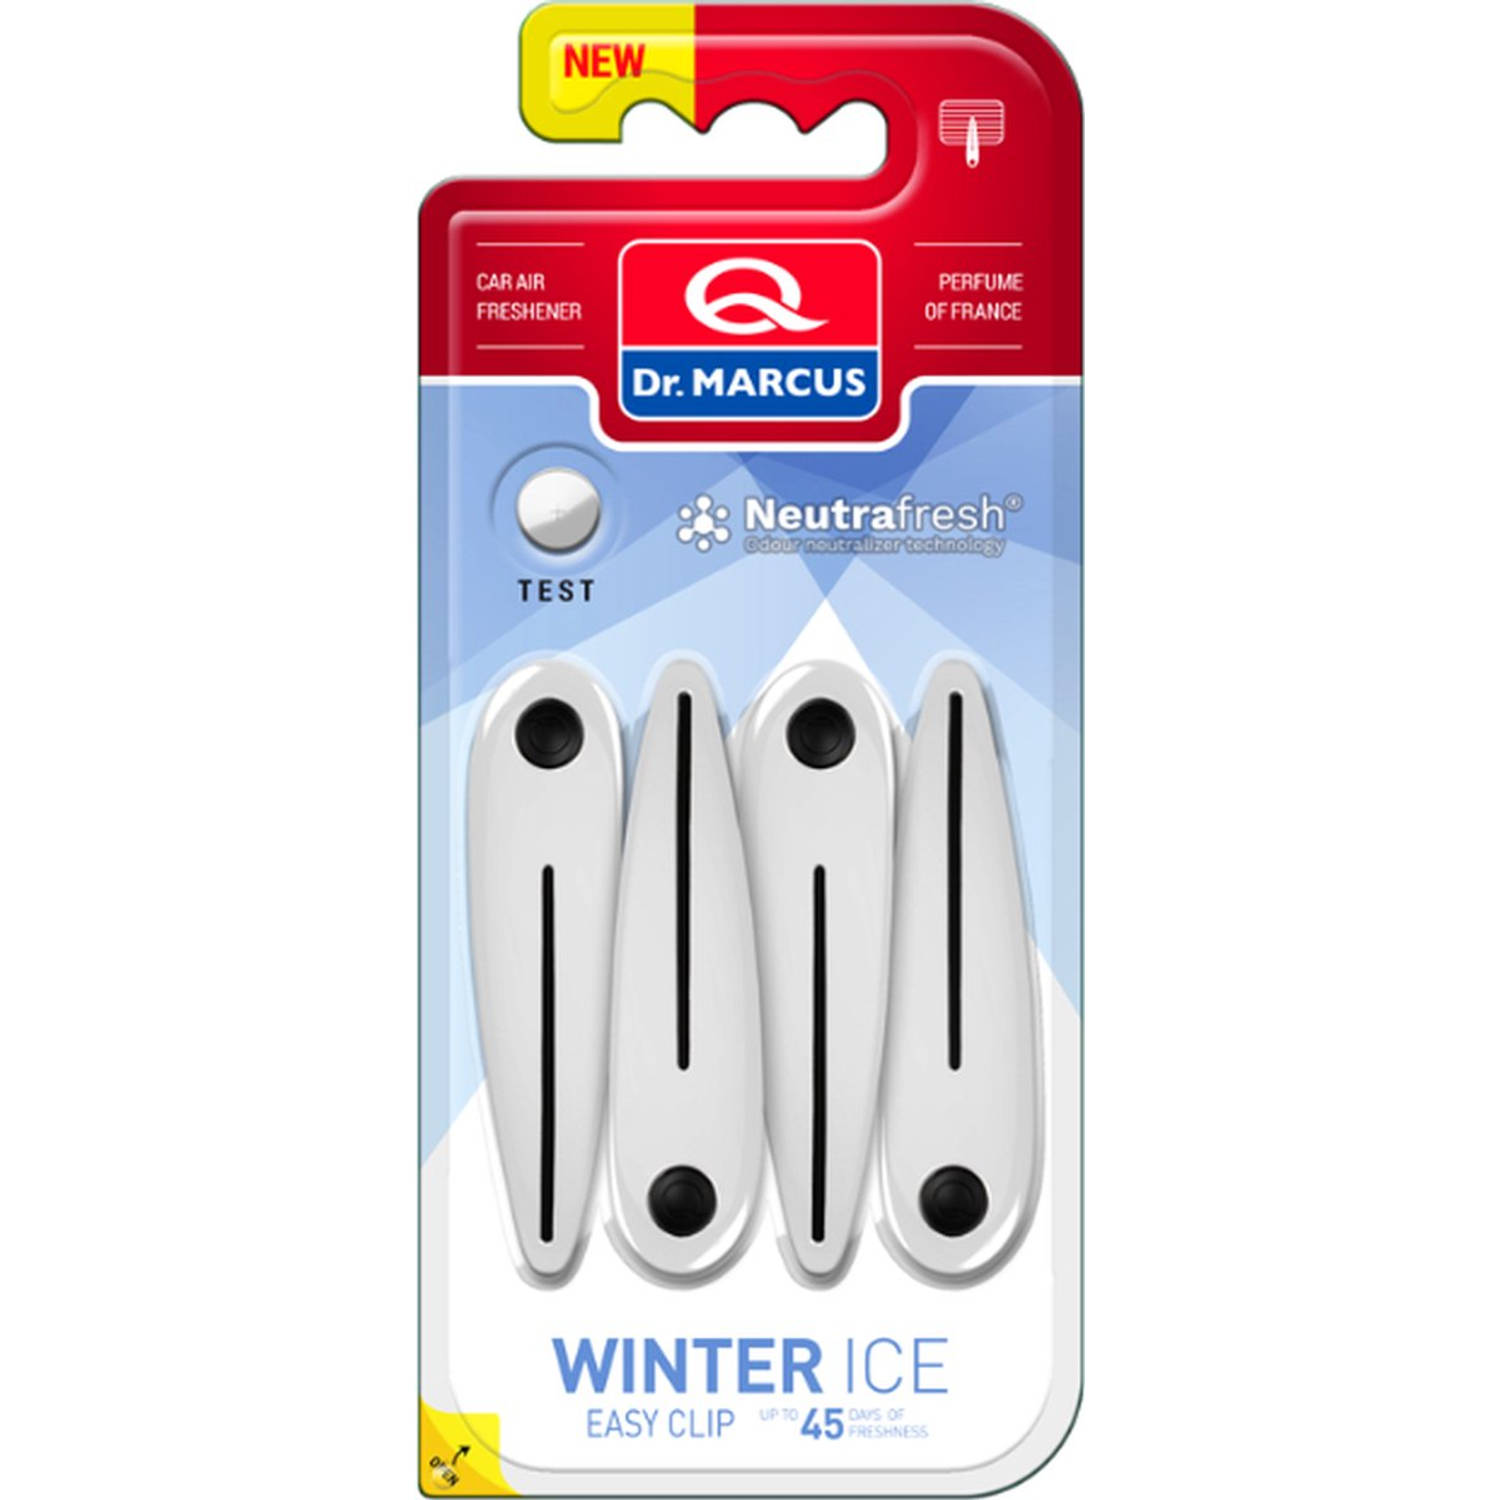 Dr. Marcus Easy Clip Winter Ice luchtverfrisser met neutrafresh technologie 4 clips voor 4 sterktes